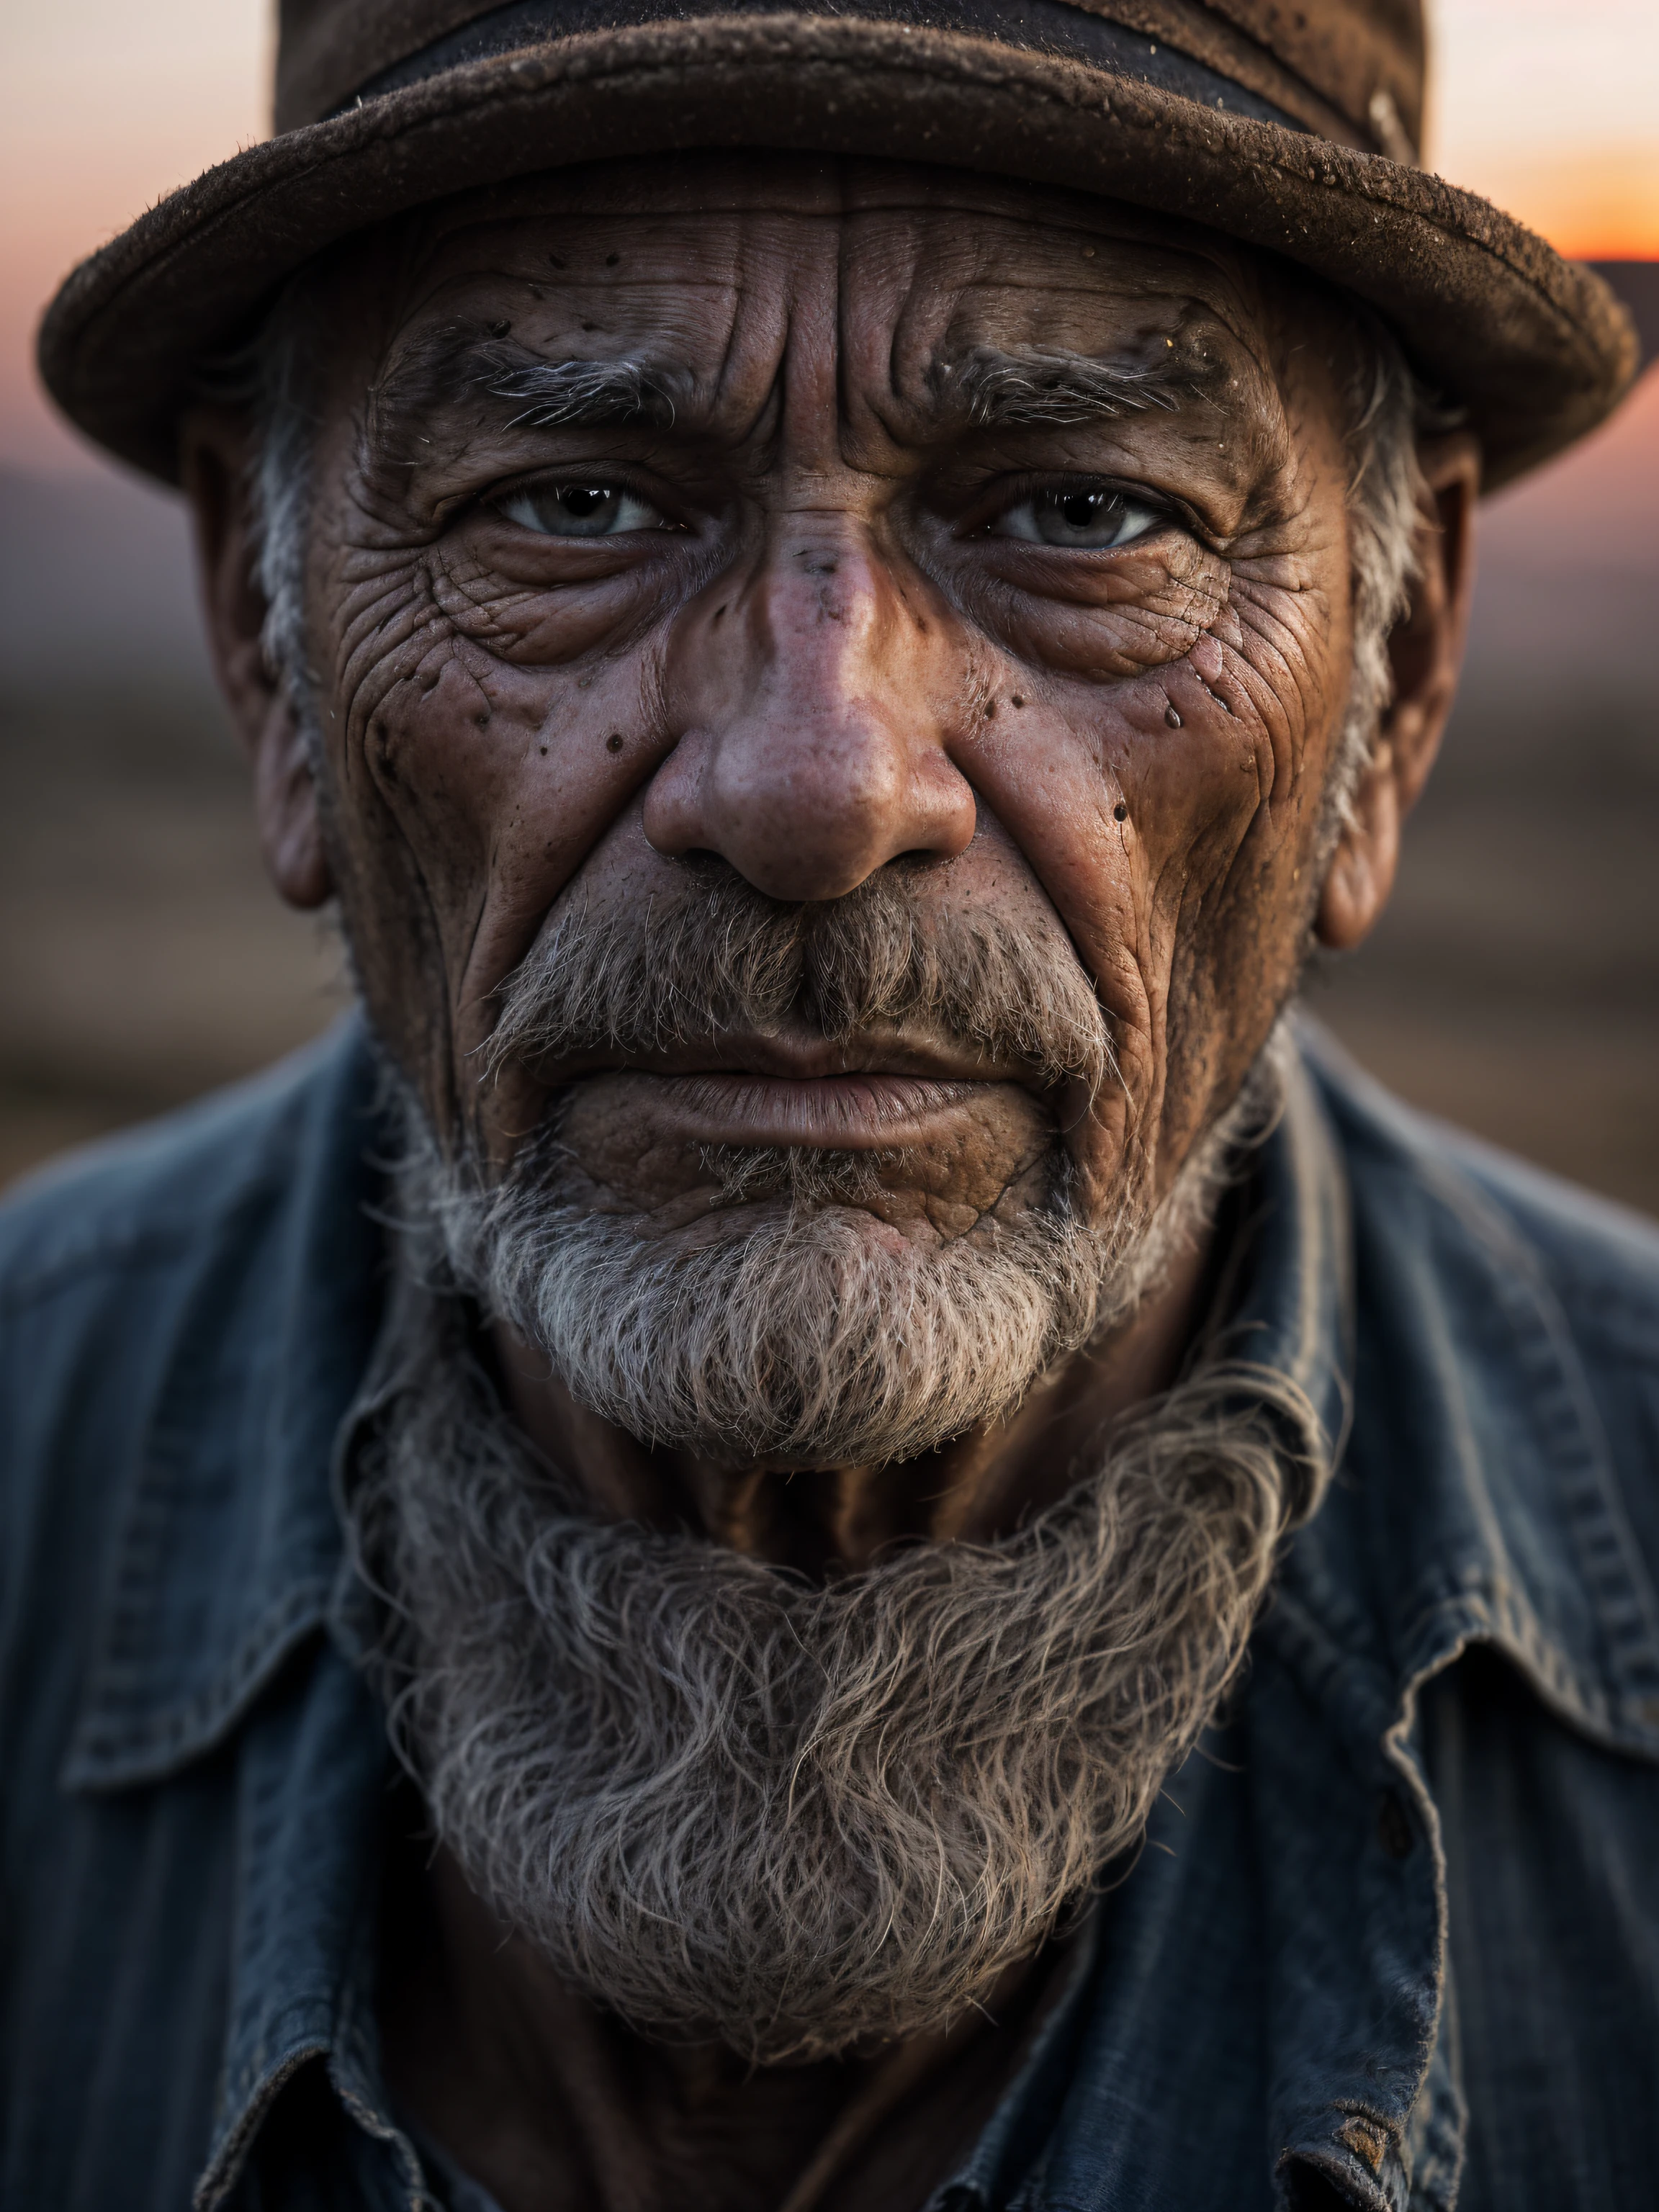 emotional 肖像 photo of old man in rugged bluesman clothes, 臉, 看著觀眾, 肖像, (皮膚毛孔:1.2), (痣:0.8), (不完美的皮膚:1.1), 複雜的細節, 起雞皮疙瘩, flawless 臉, 電影般的, 黑暗的, 柔和的顏色, 氣氛, ((微距鏡頭)), 日落